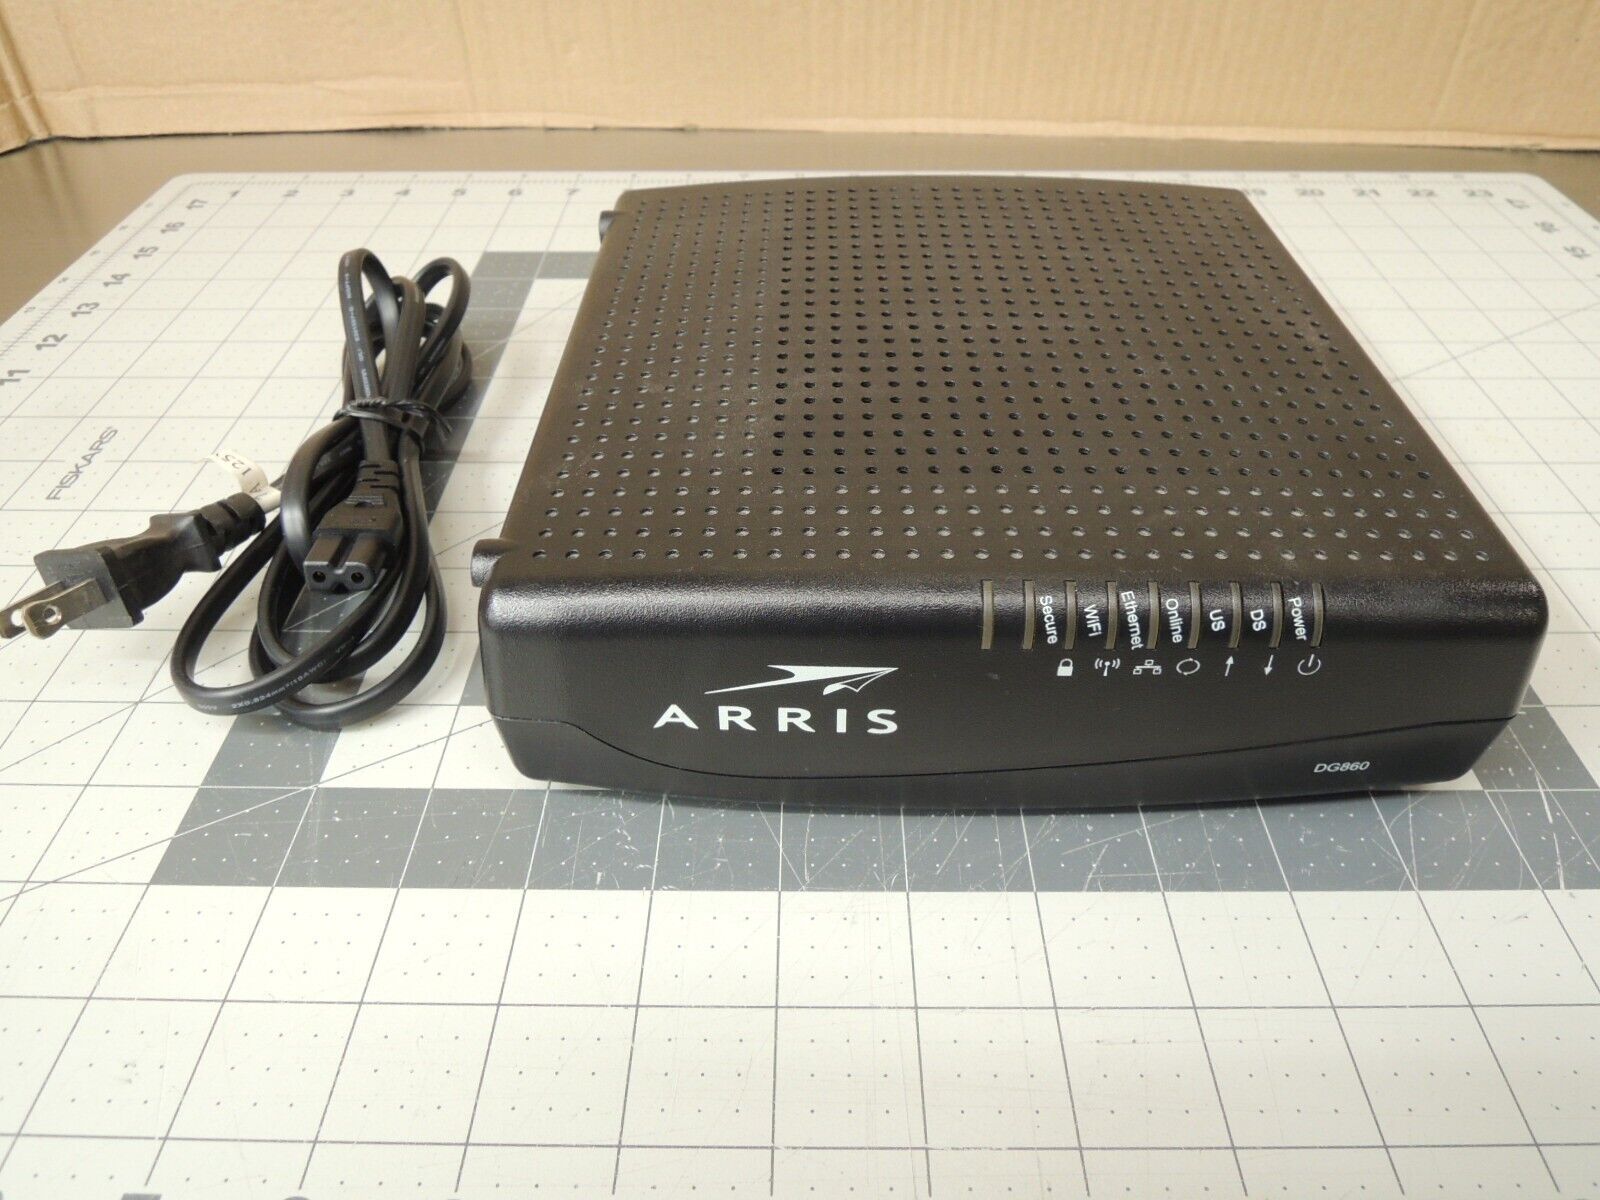 Arris DG860A DOCSIS 3.0 Wireless Cable Modem DG860A43F4D2 with Power Cord